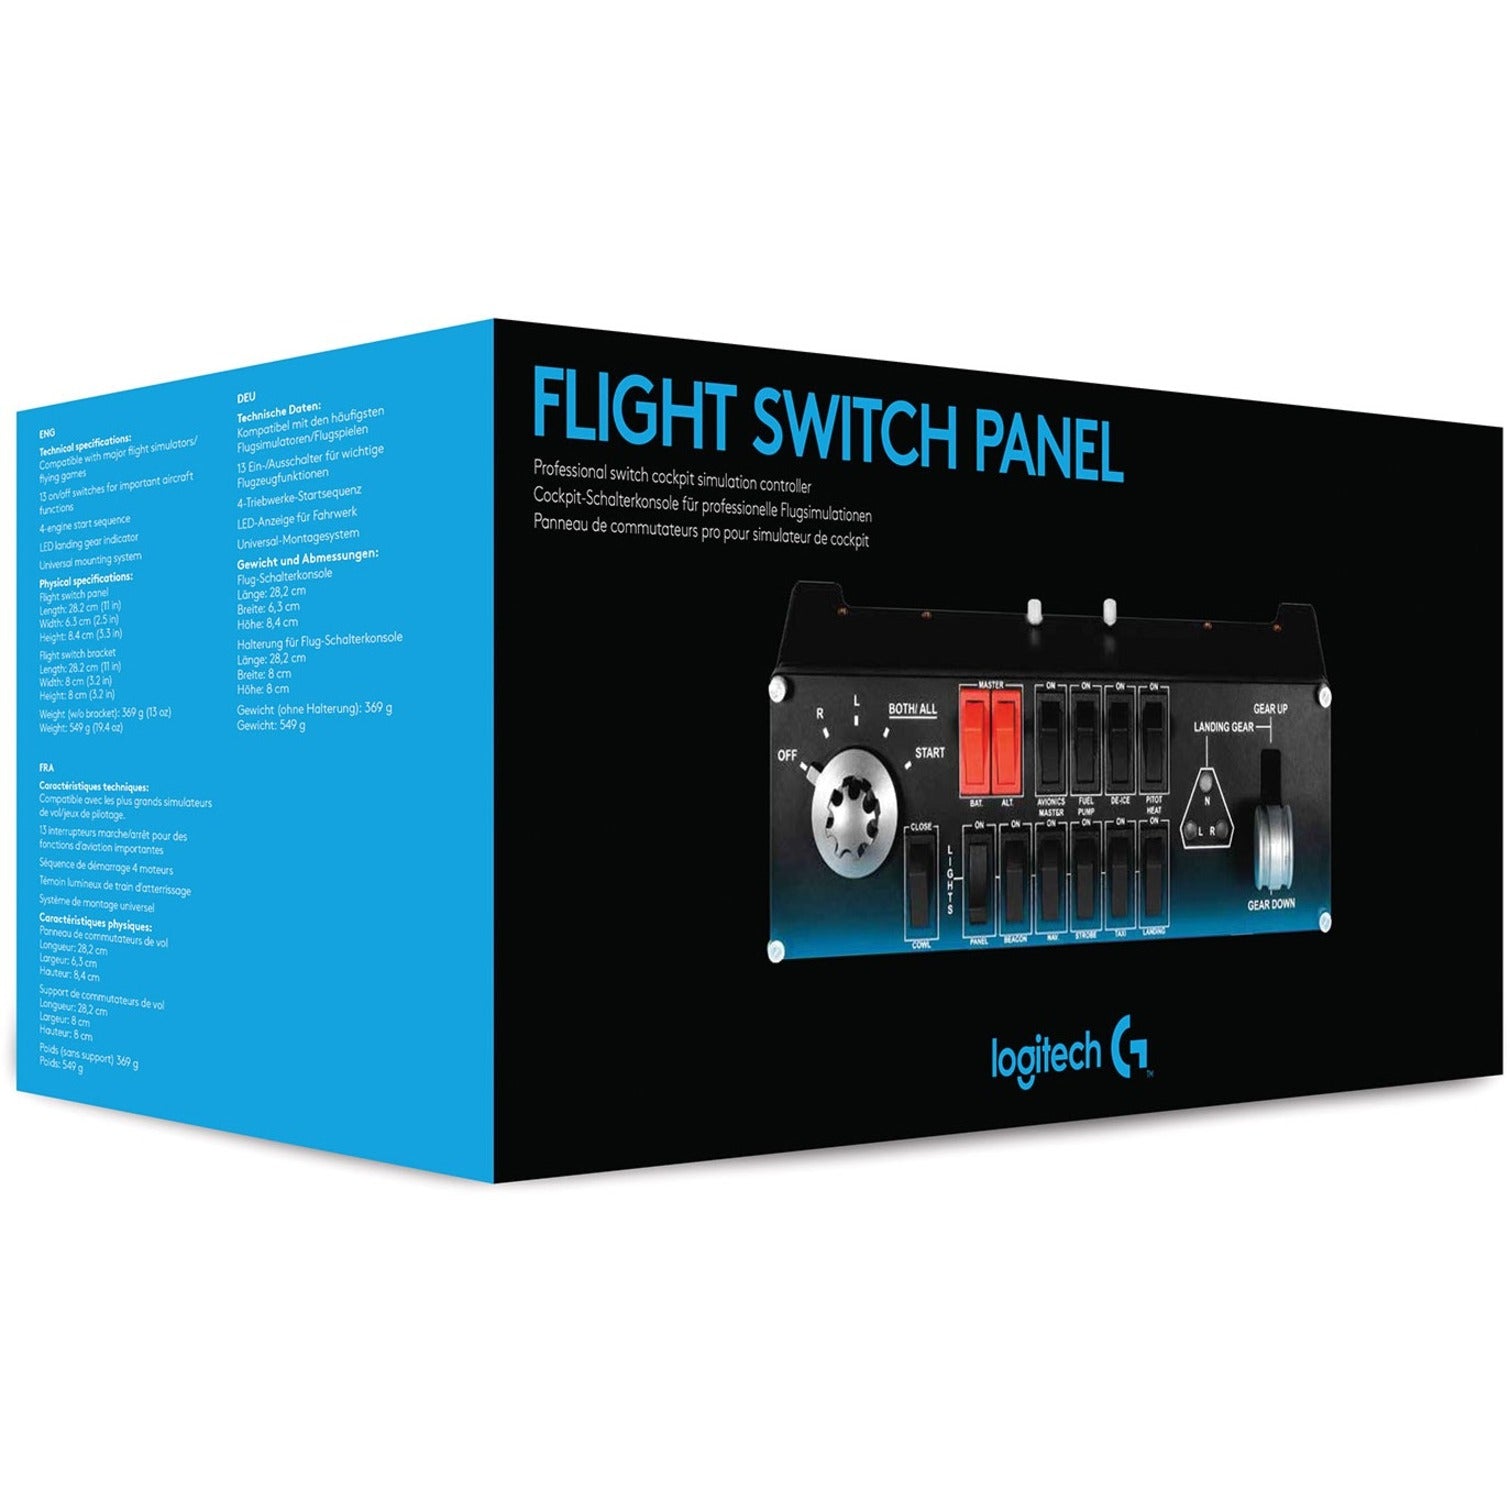 Logitech 945-000030 Saitek Pro Flight Switch Panel, Professional Simulation Switch Controller